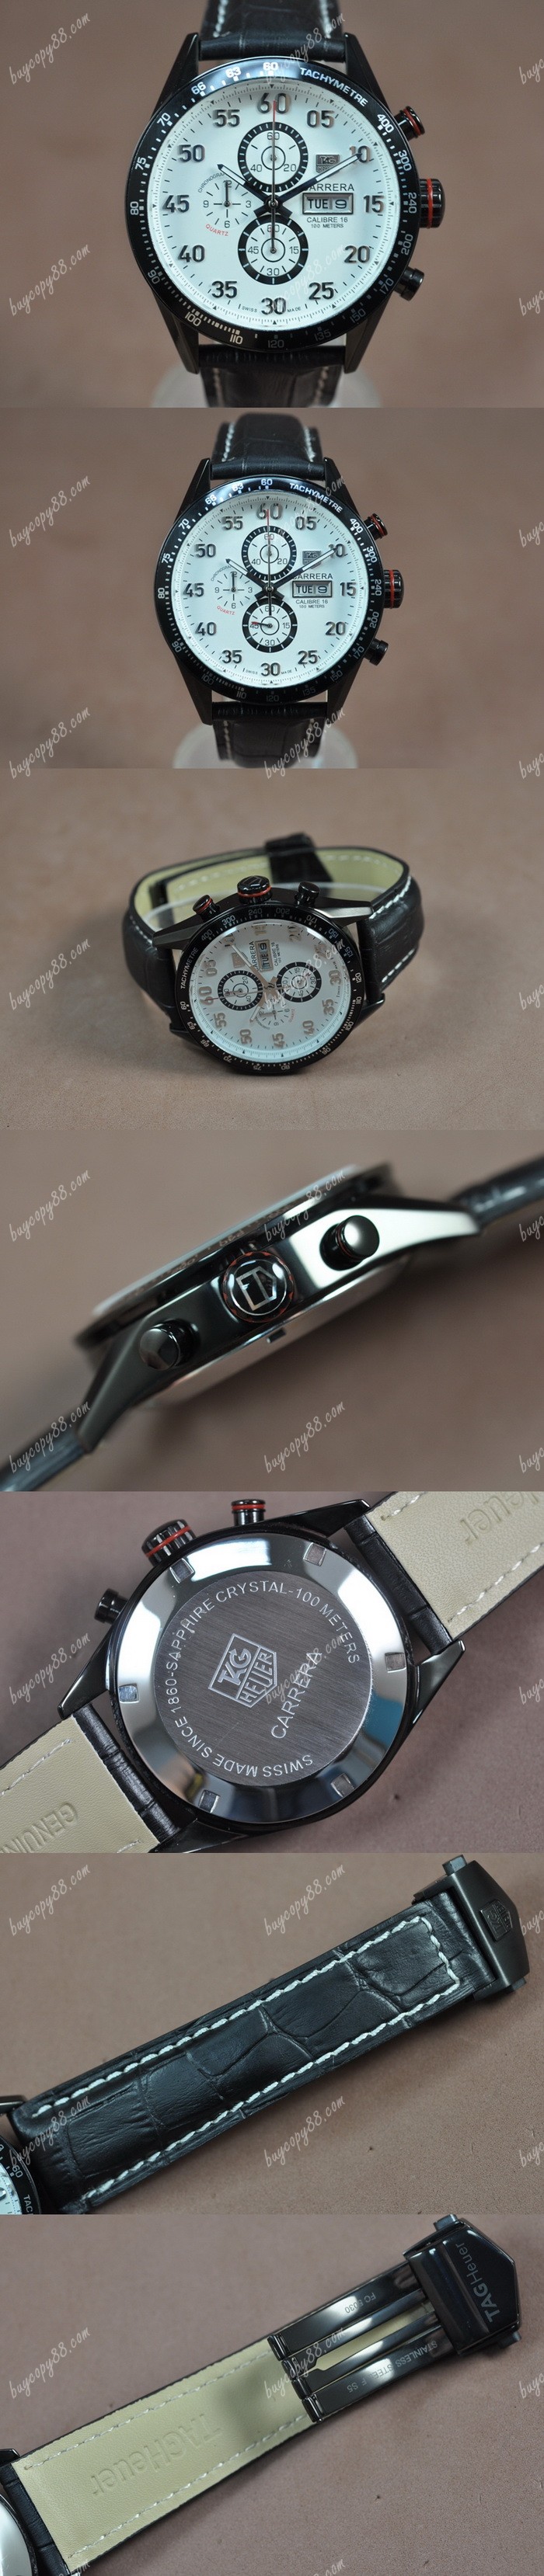  豪雅錶Tag Heuer Carrera 43mm Black PVD White Dial Jap OS11石英錶0